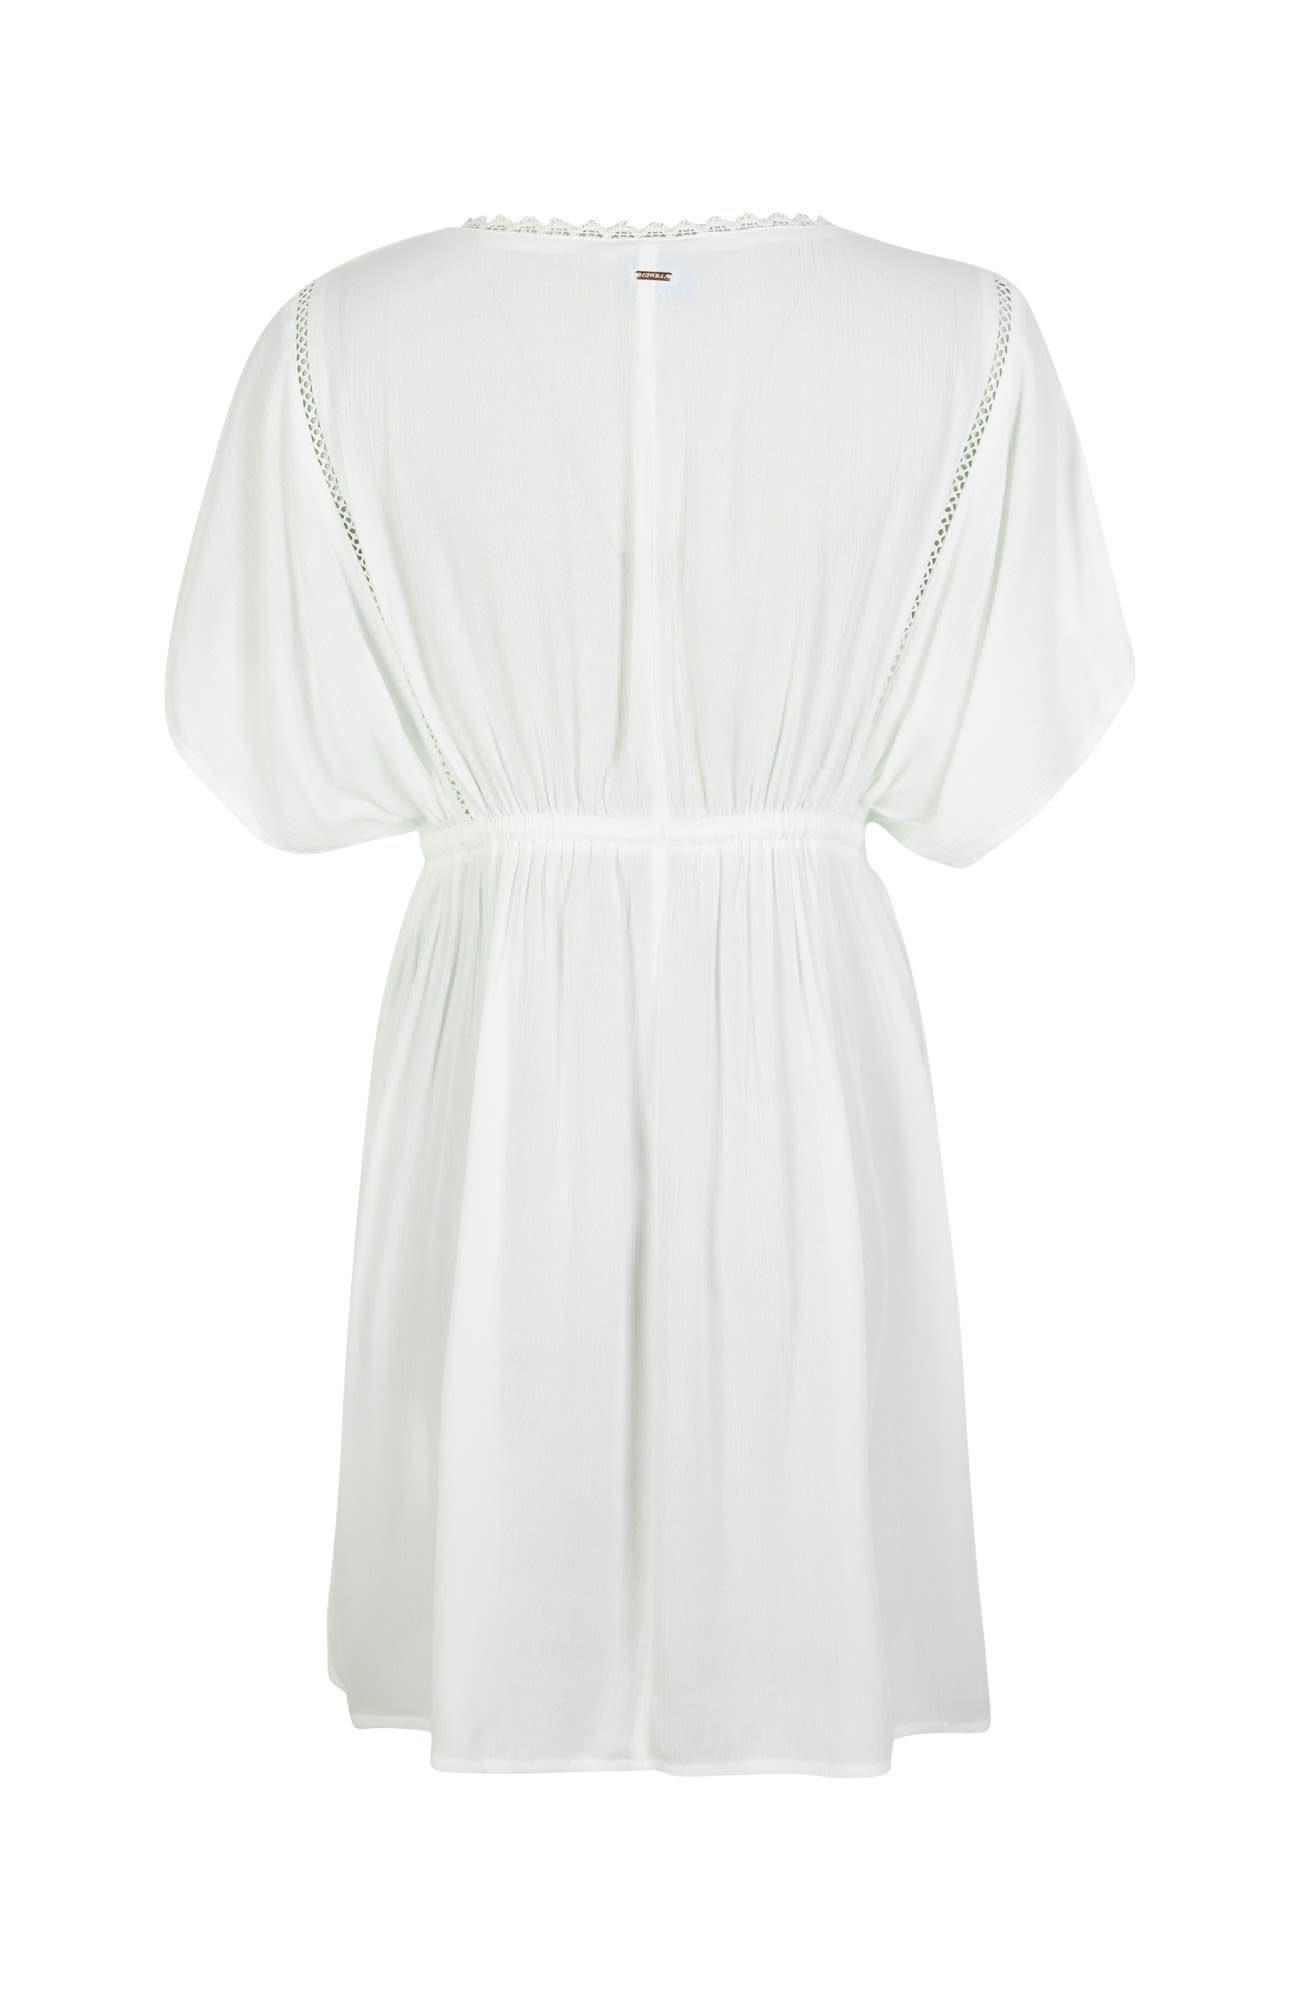 White W Oneill Snow O'Neill Sommerkleid Kleid Cover Up Damen Beach Mona